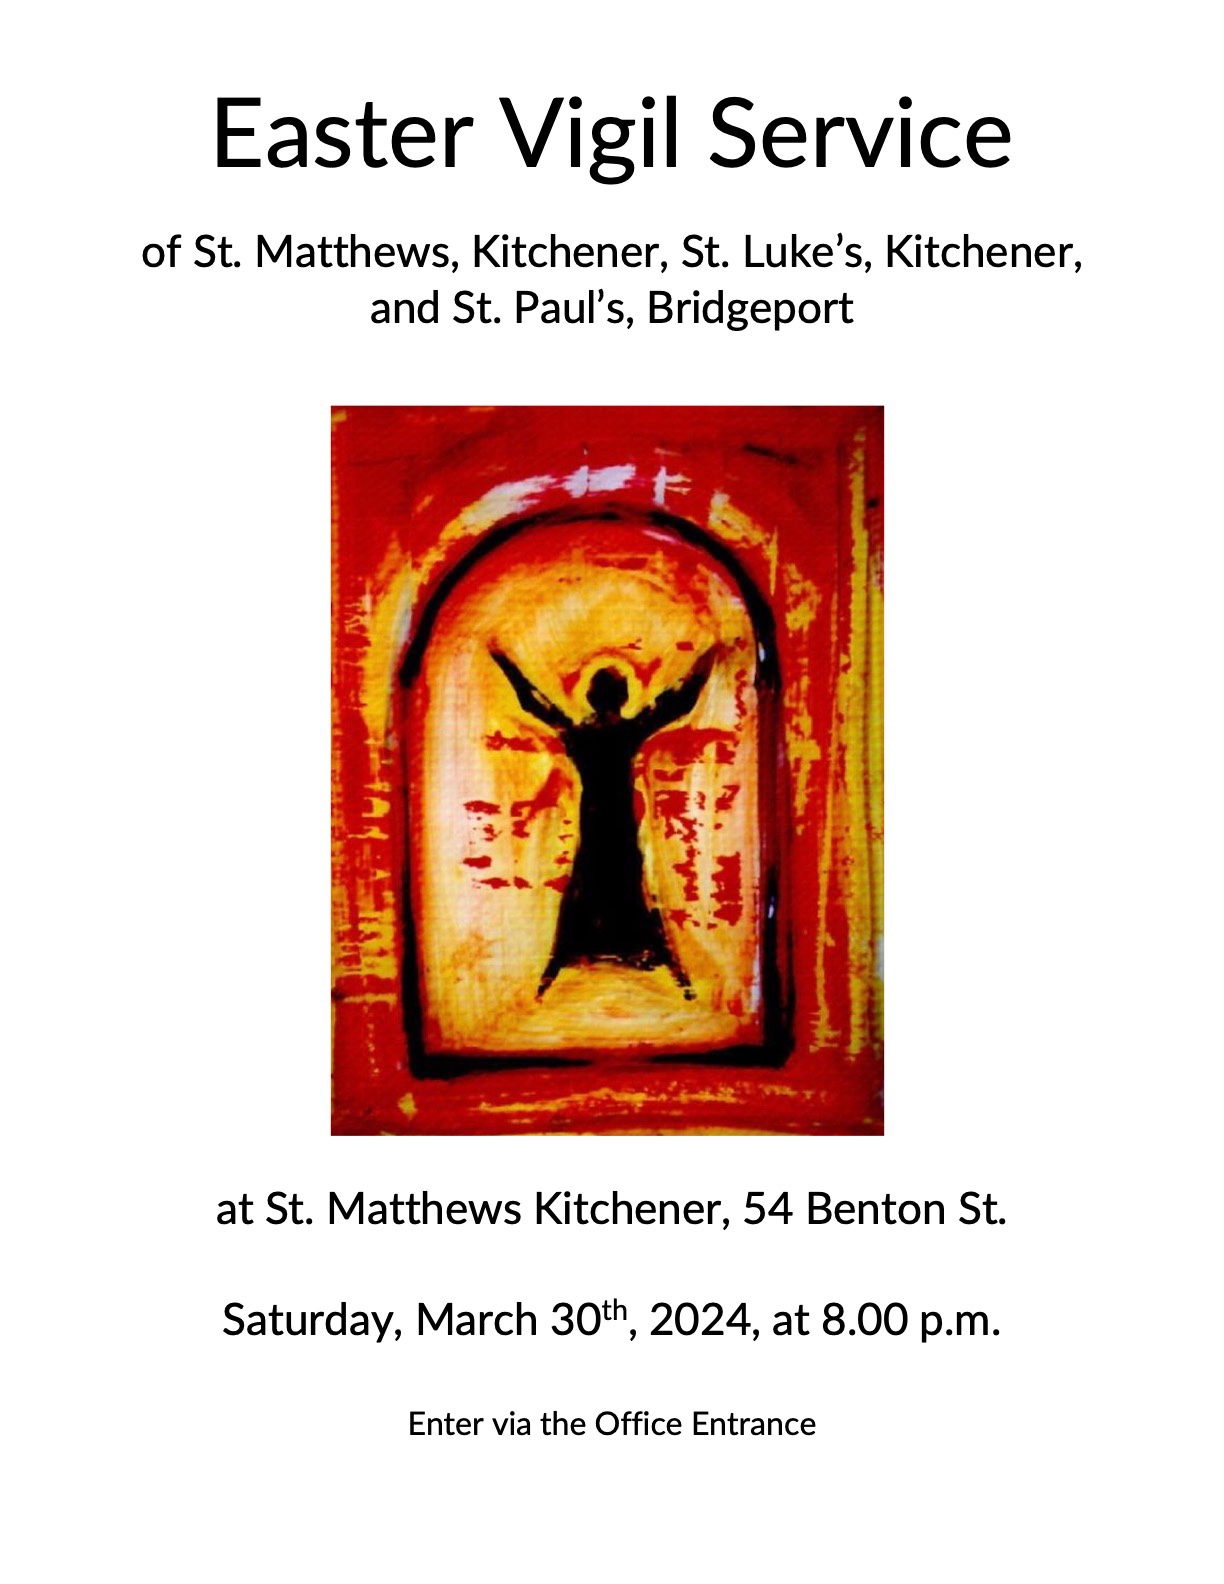 Easter Vigil Service: Saturday March 30th at 8 p.m